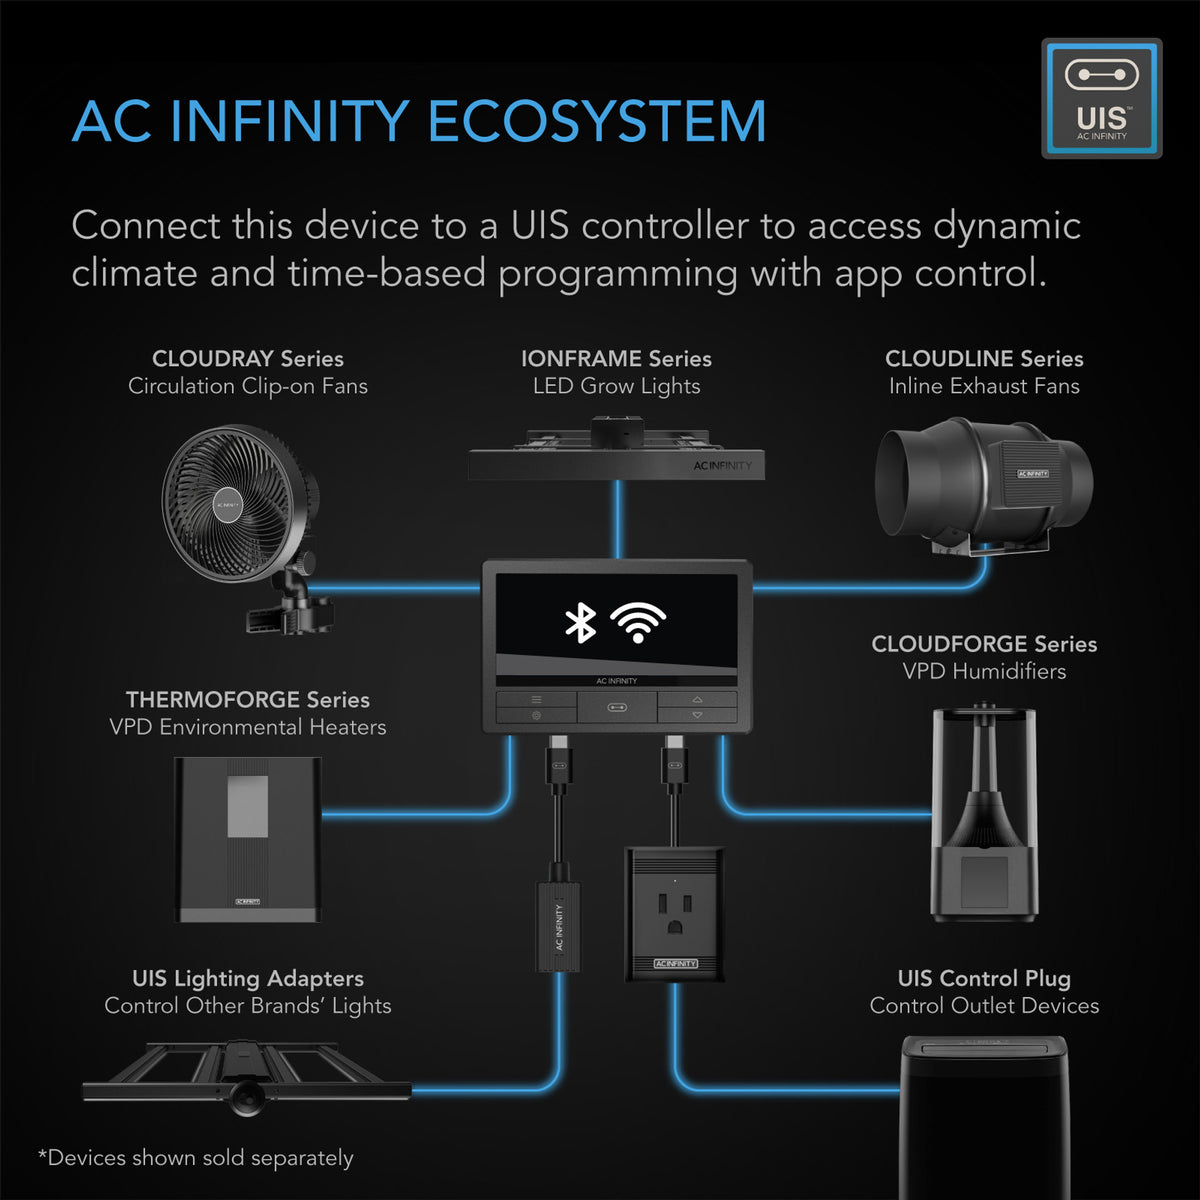 AC Infinity ecosystem build in